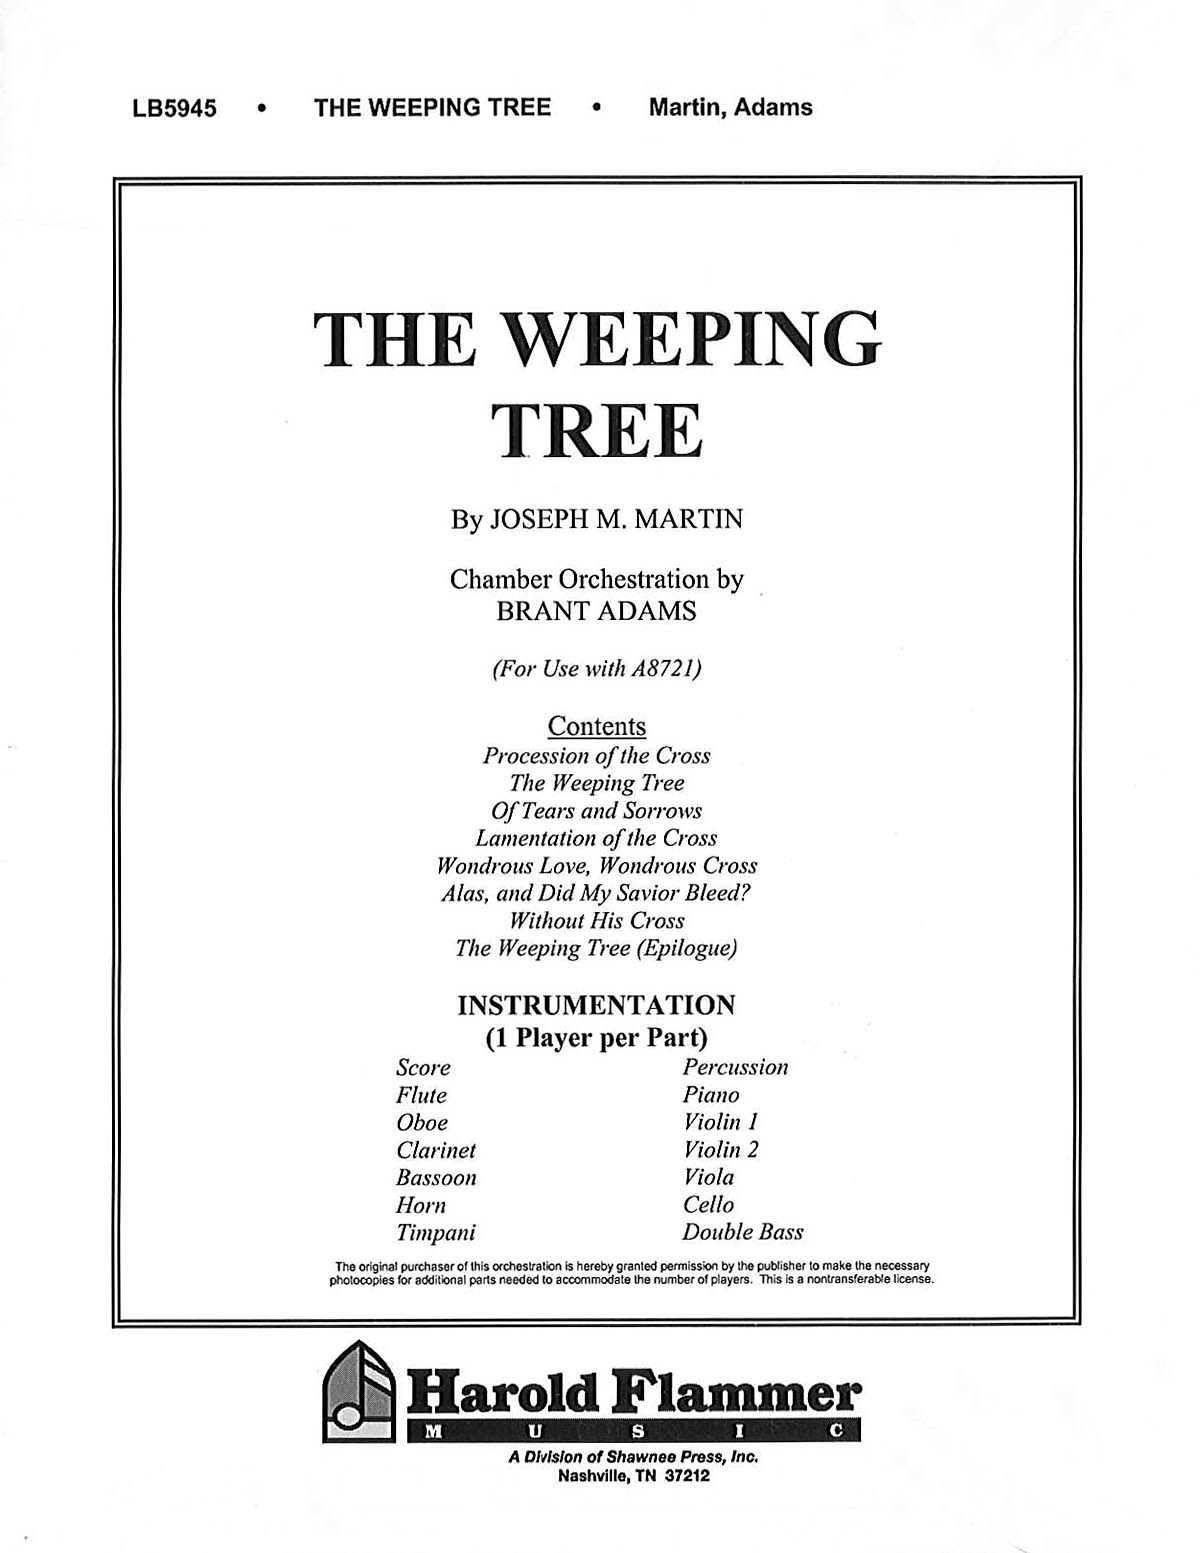 Joseph M. Martin: The Weeping Tree: Parts